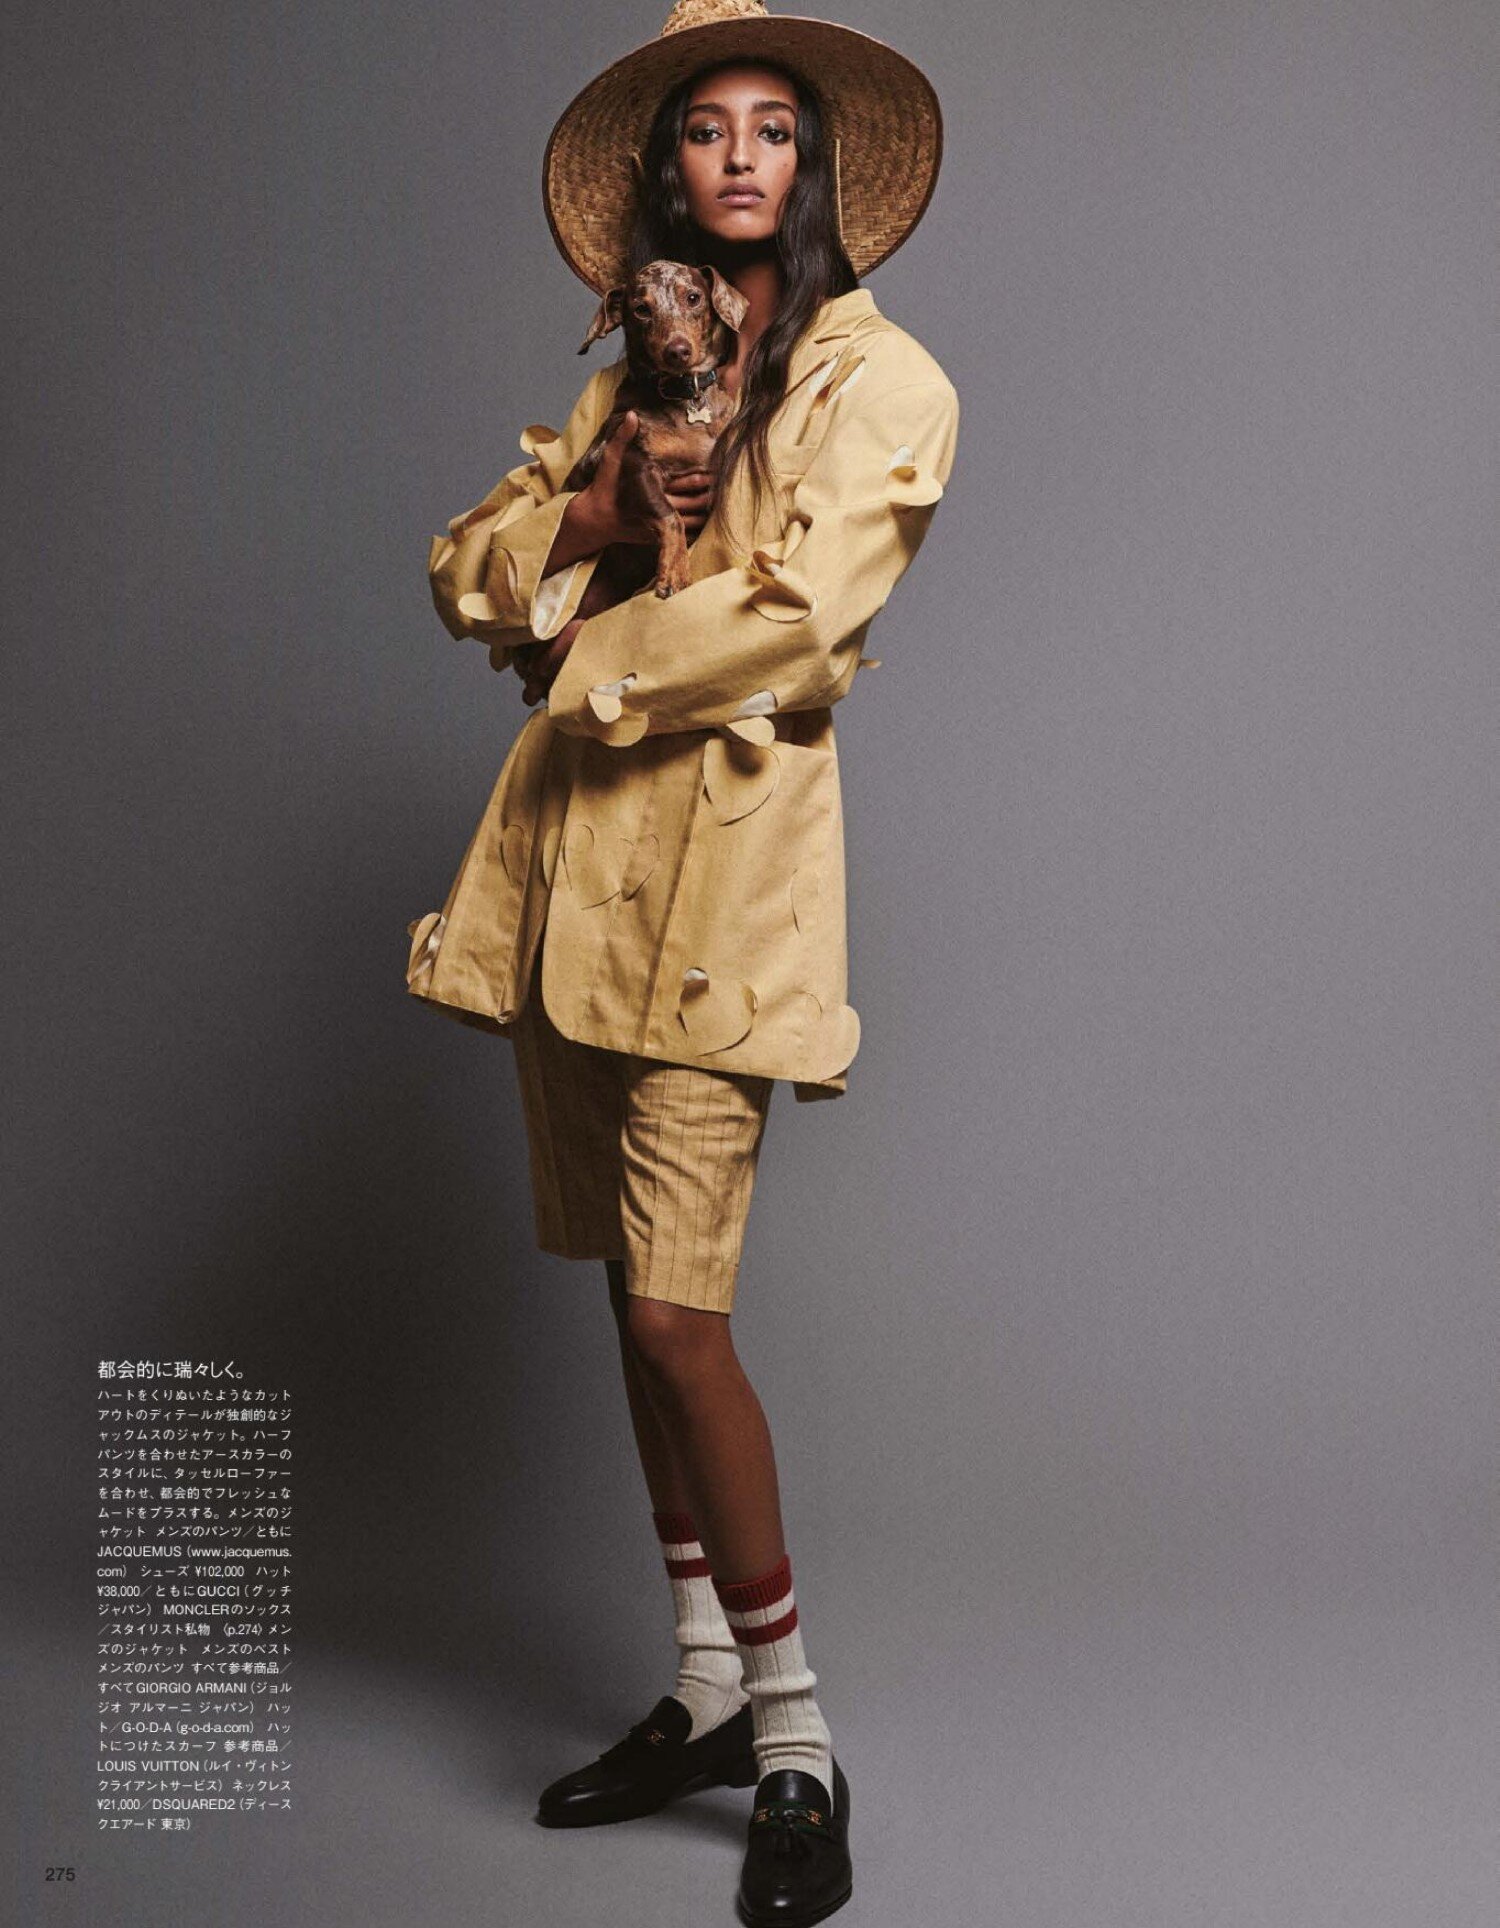 Mona Tougaard by Siampaolo Sgura Vogue Japan Jan 2021 (5).jpg